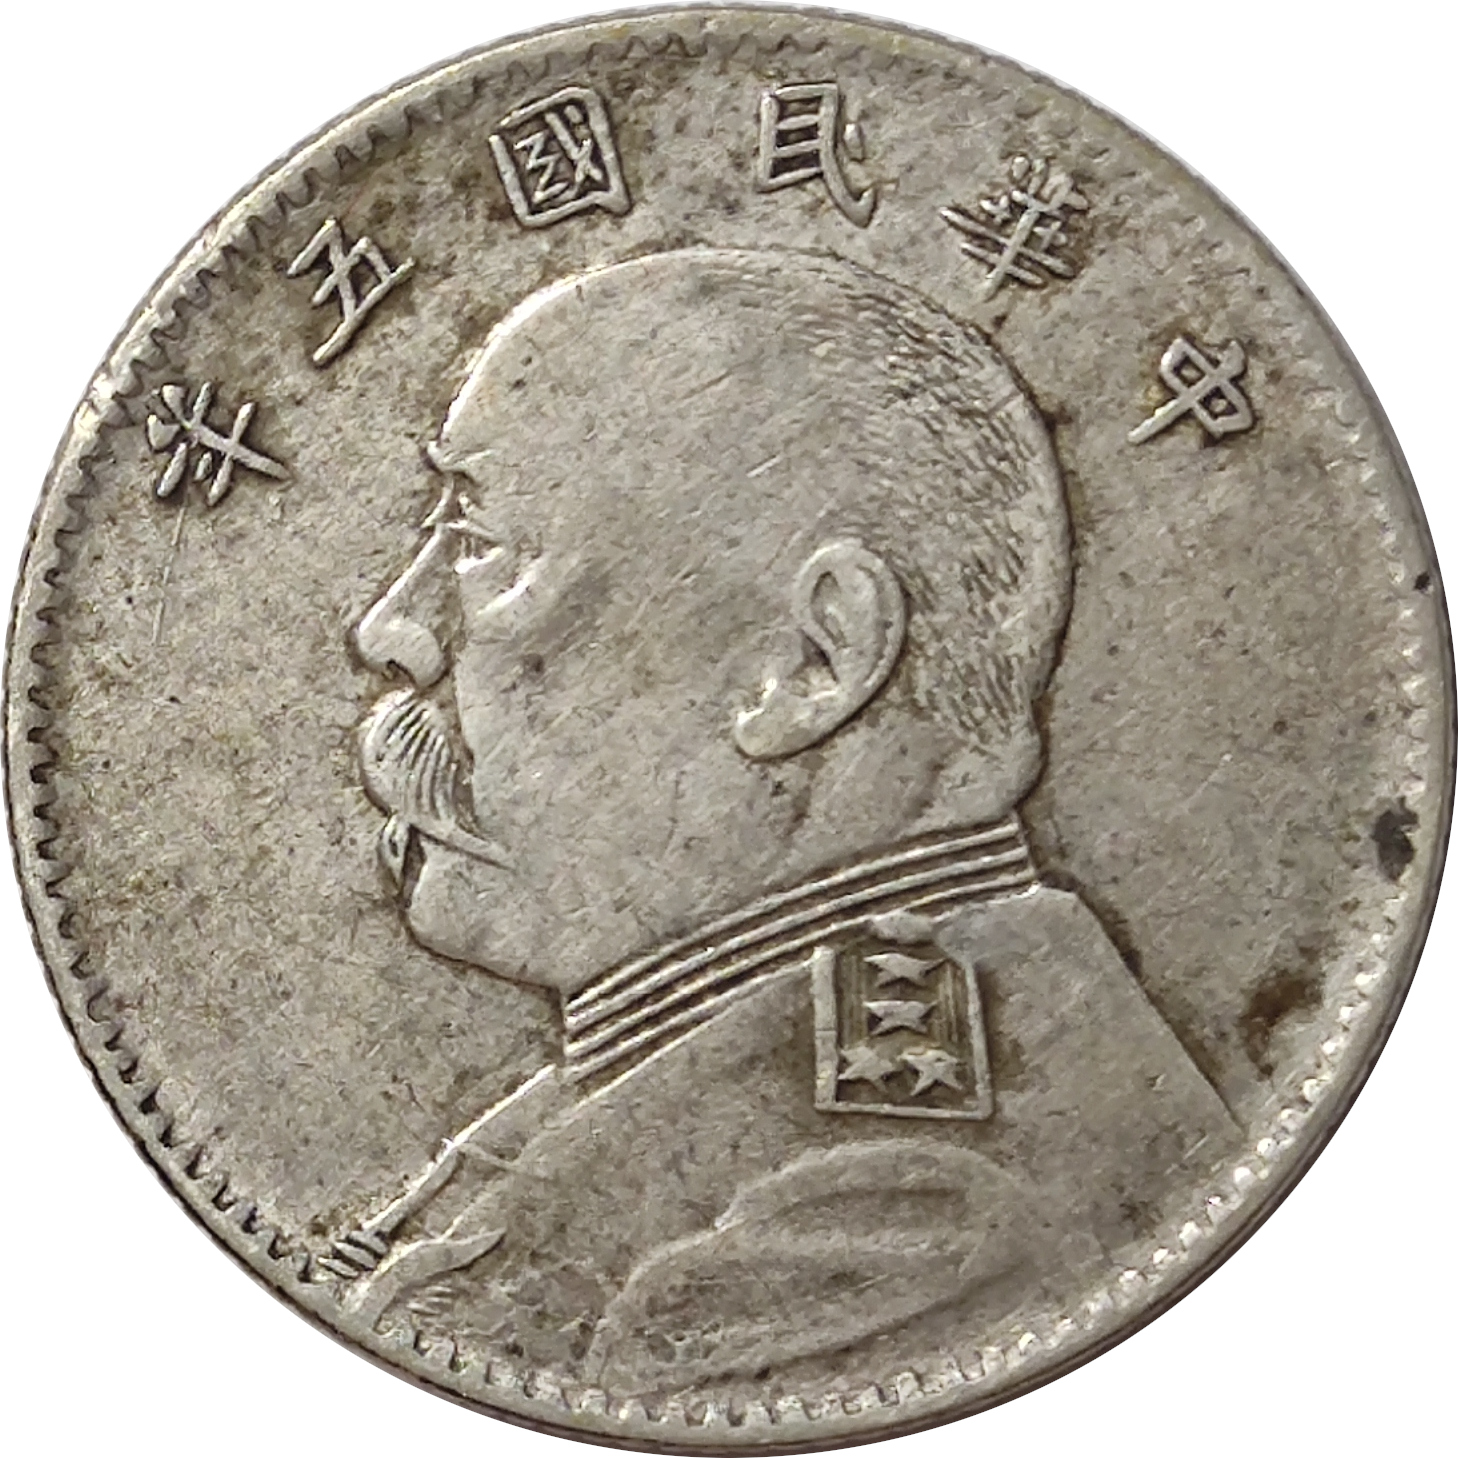 20 cents - Yuan Shikai